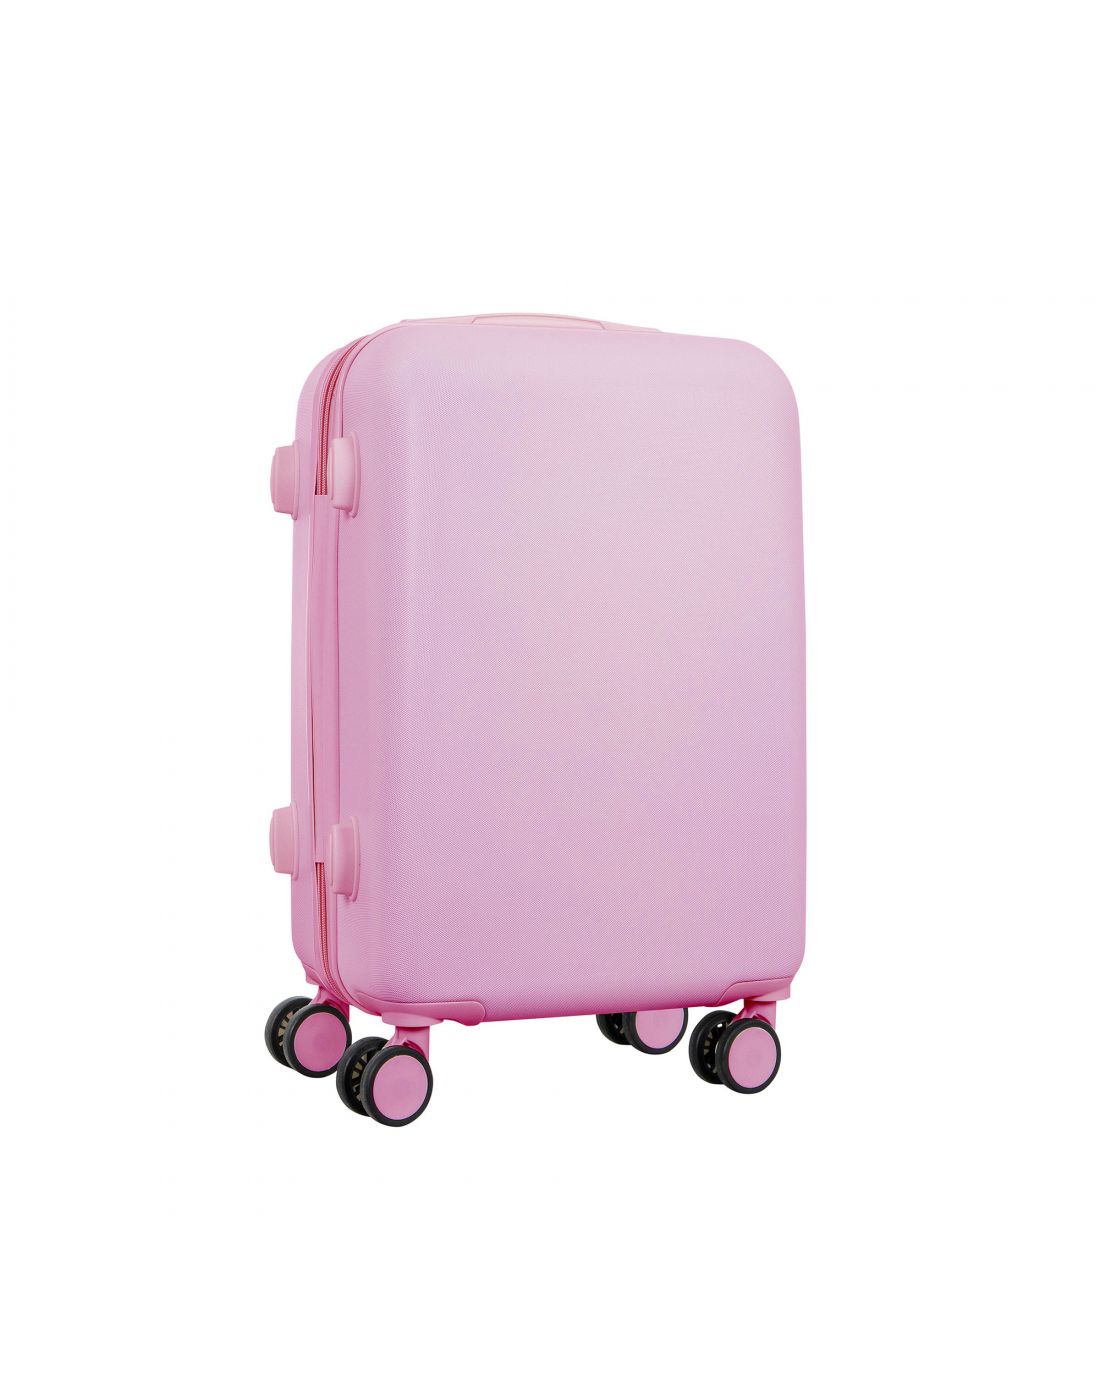 Lapin House Bapteme Pink Suitcase